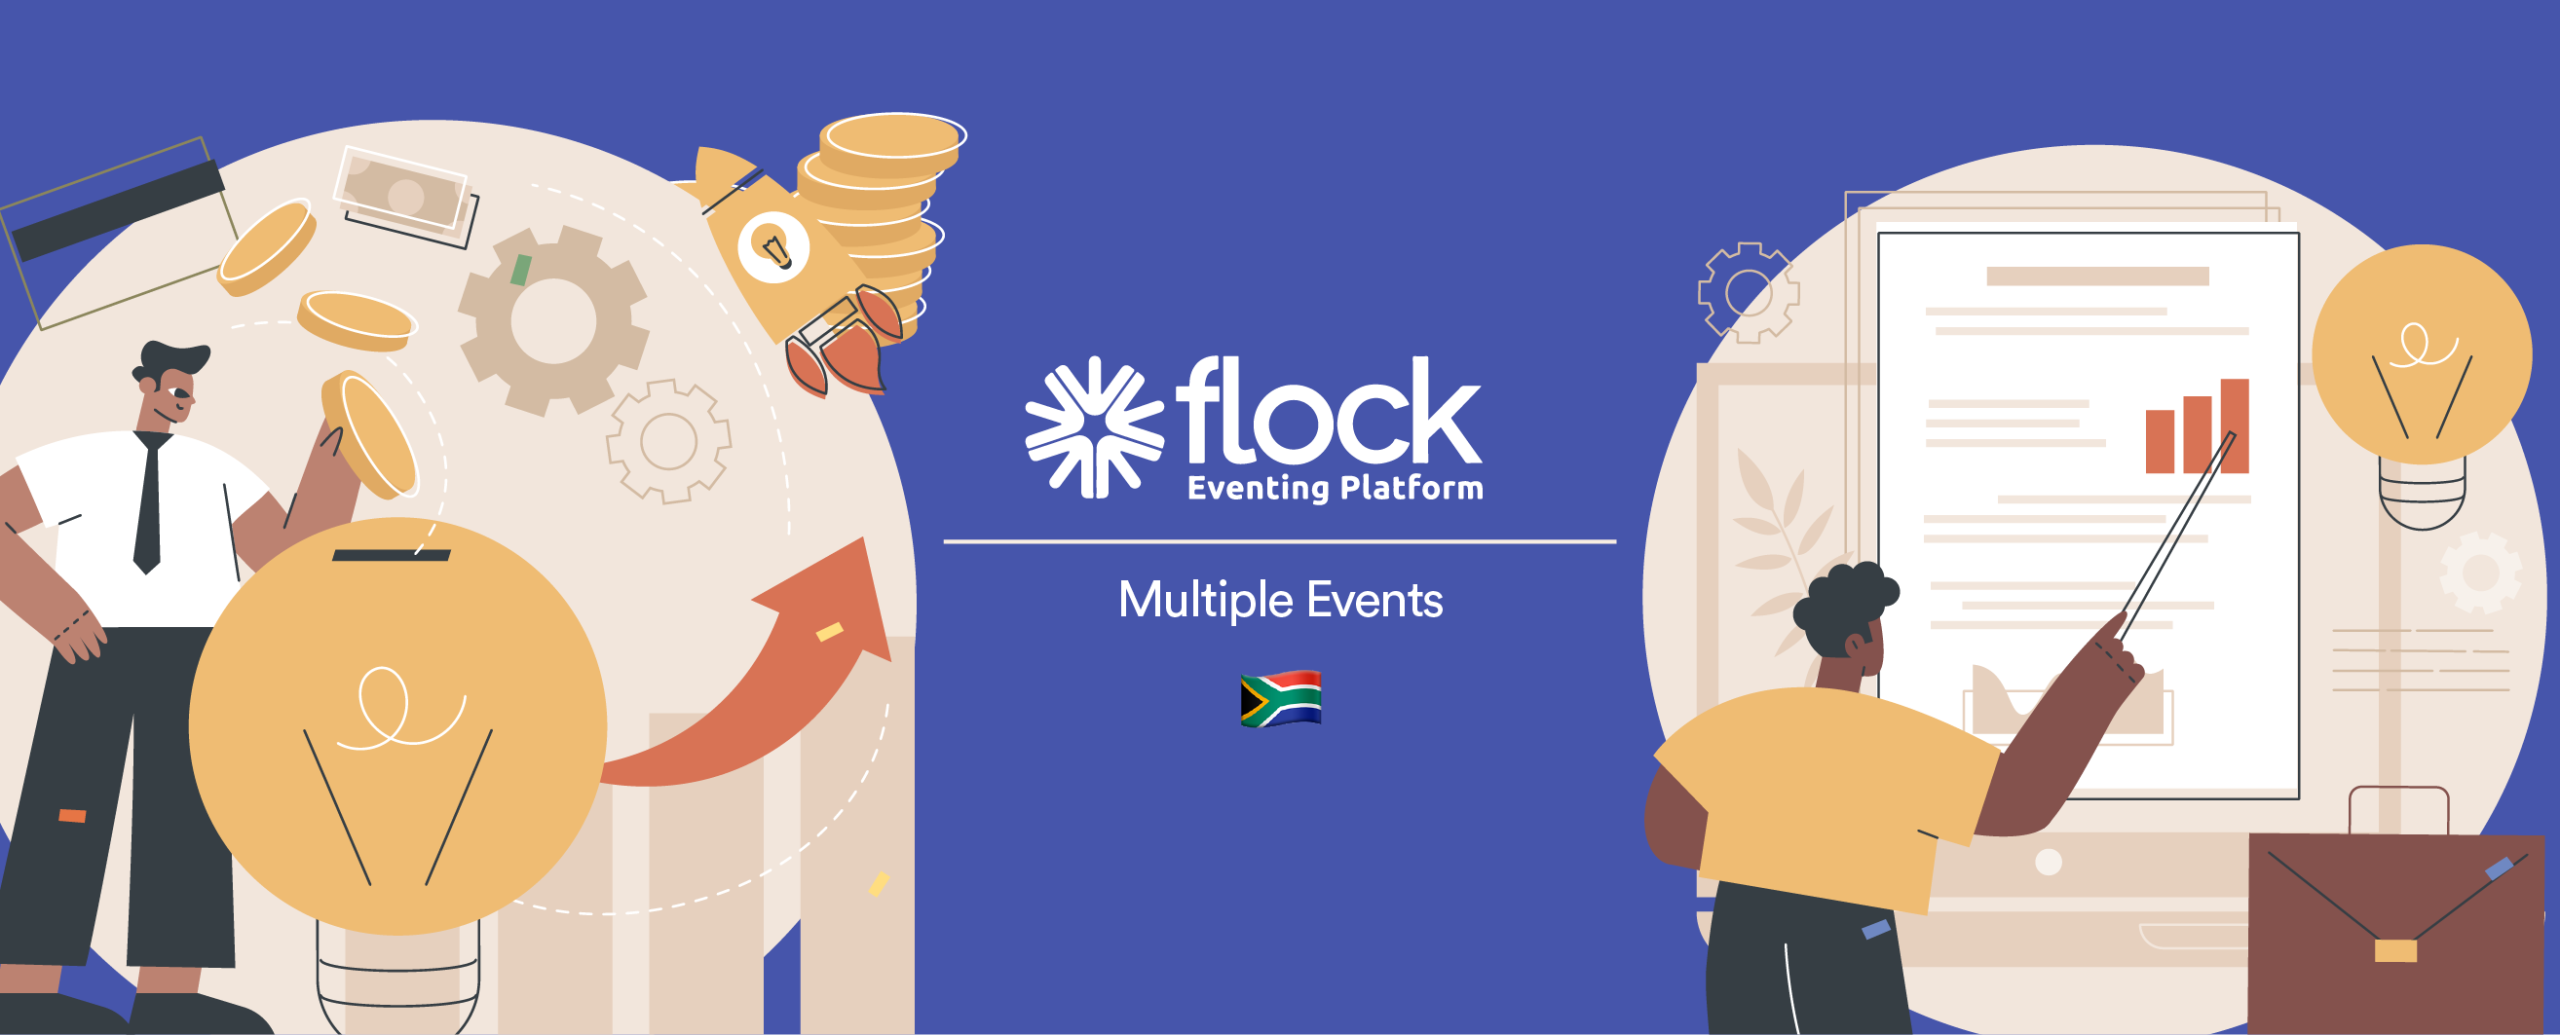 Flock - Airmeet Channel Partner